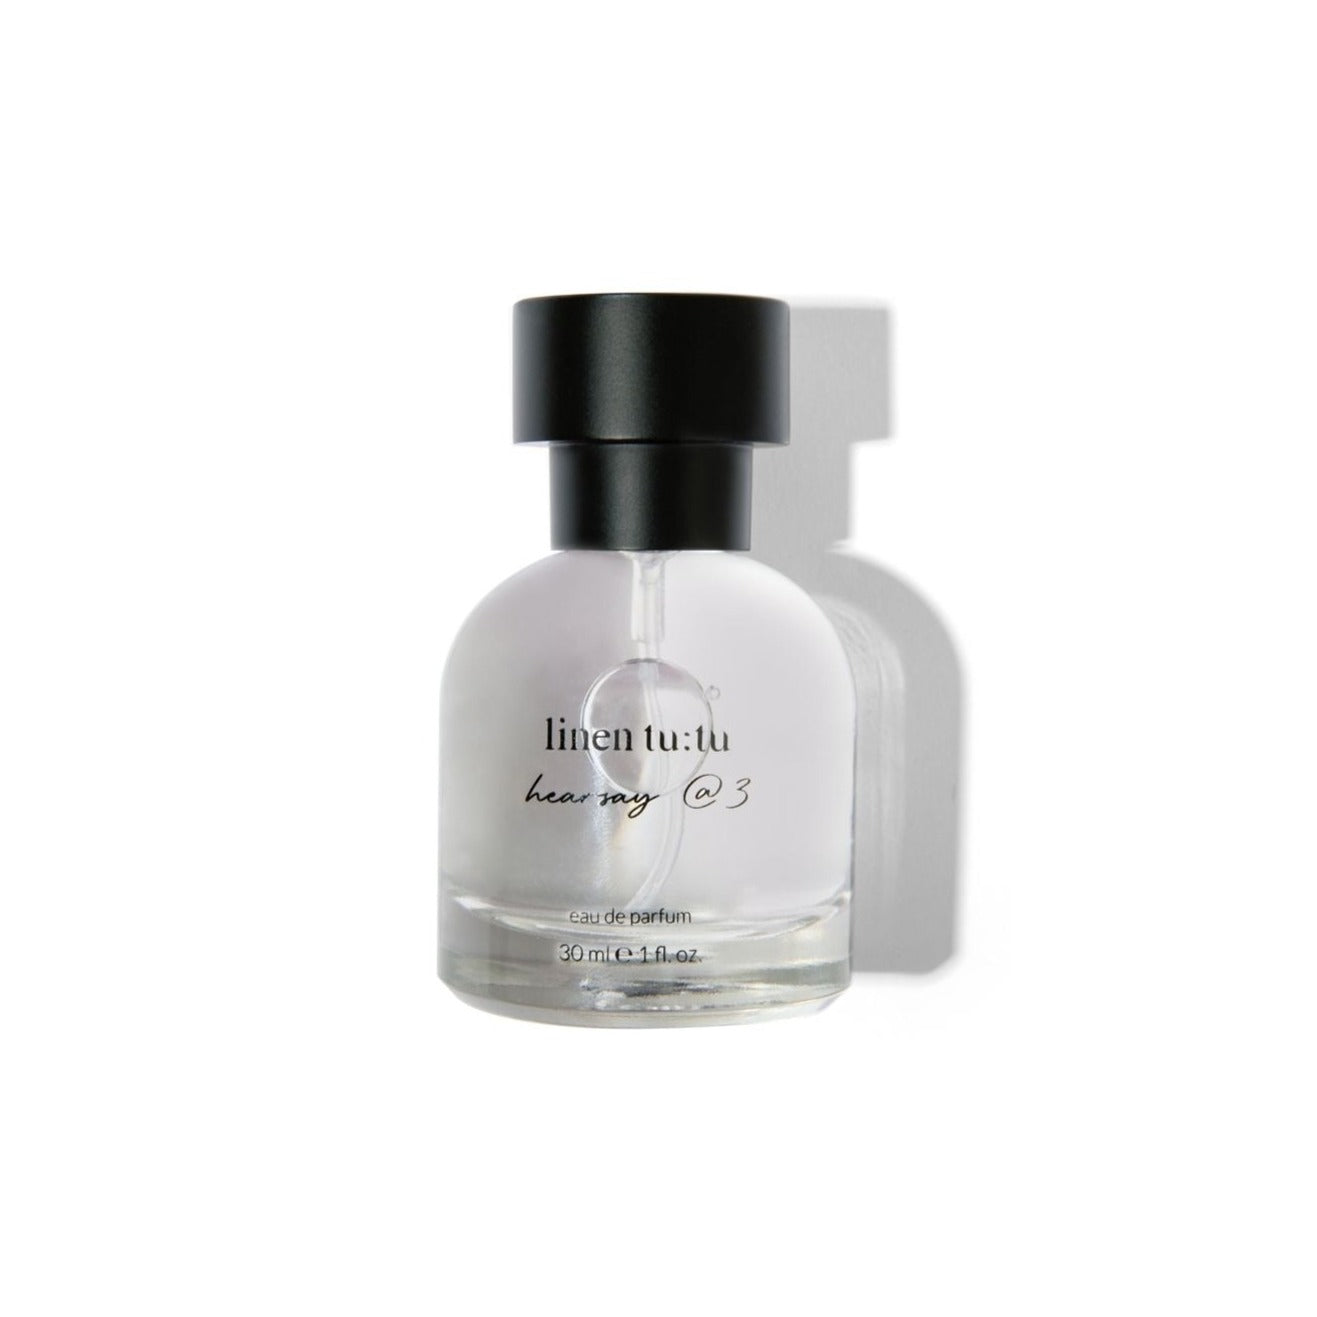 Linen Tutu Hearsay at Three 30 ml fragrance on a white background